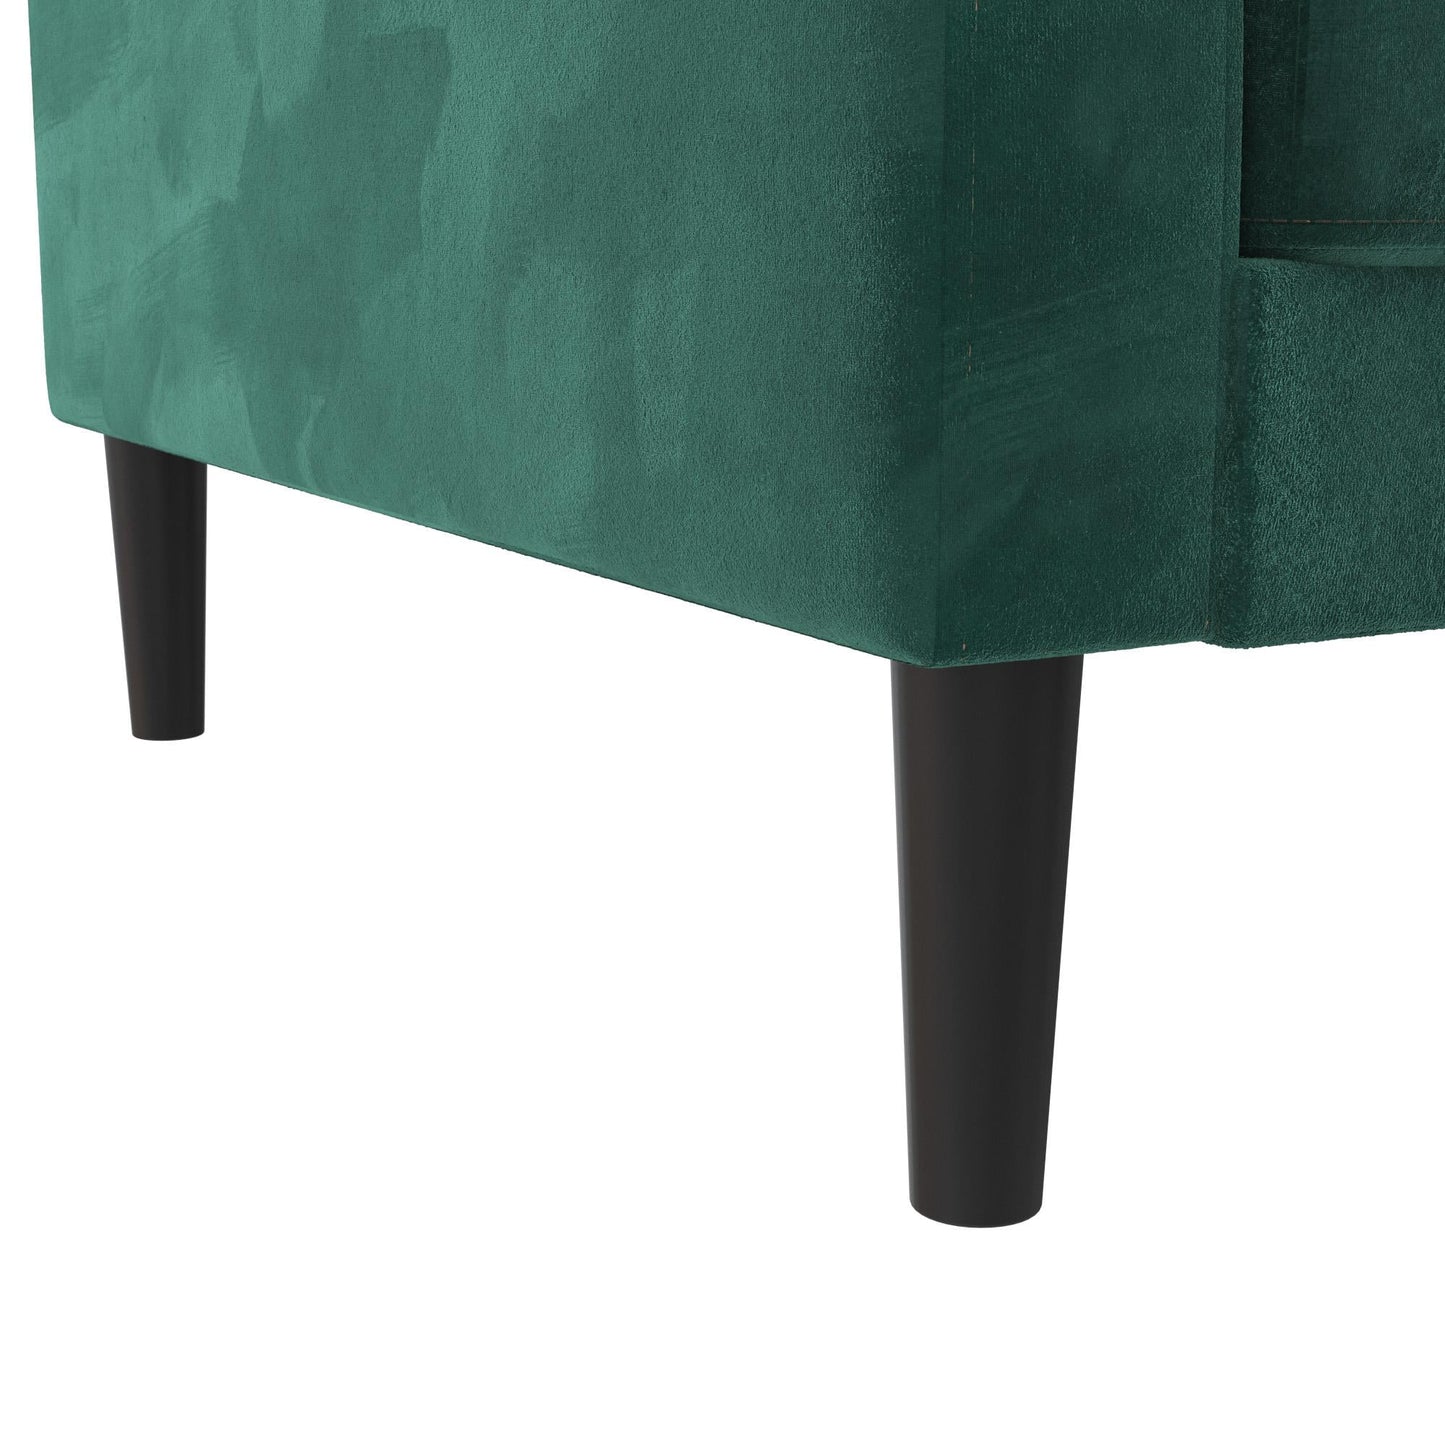 Farnsworth Futon, Green Velvet - Design By Technique